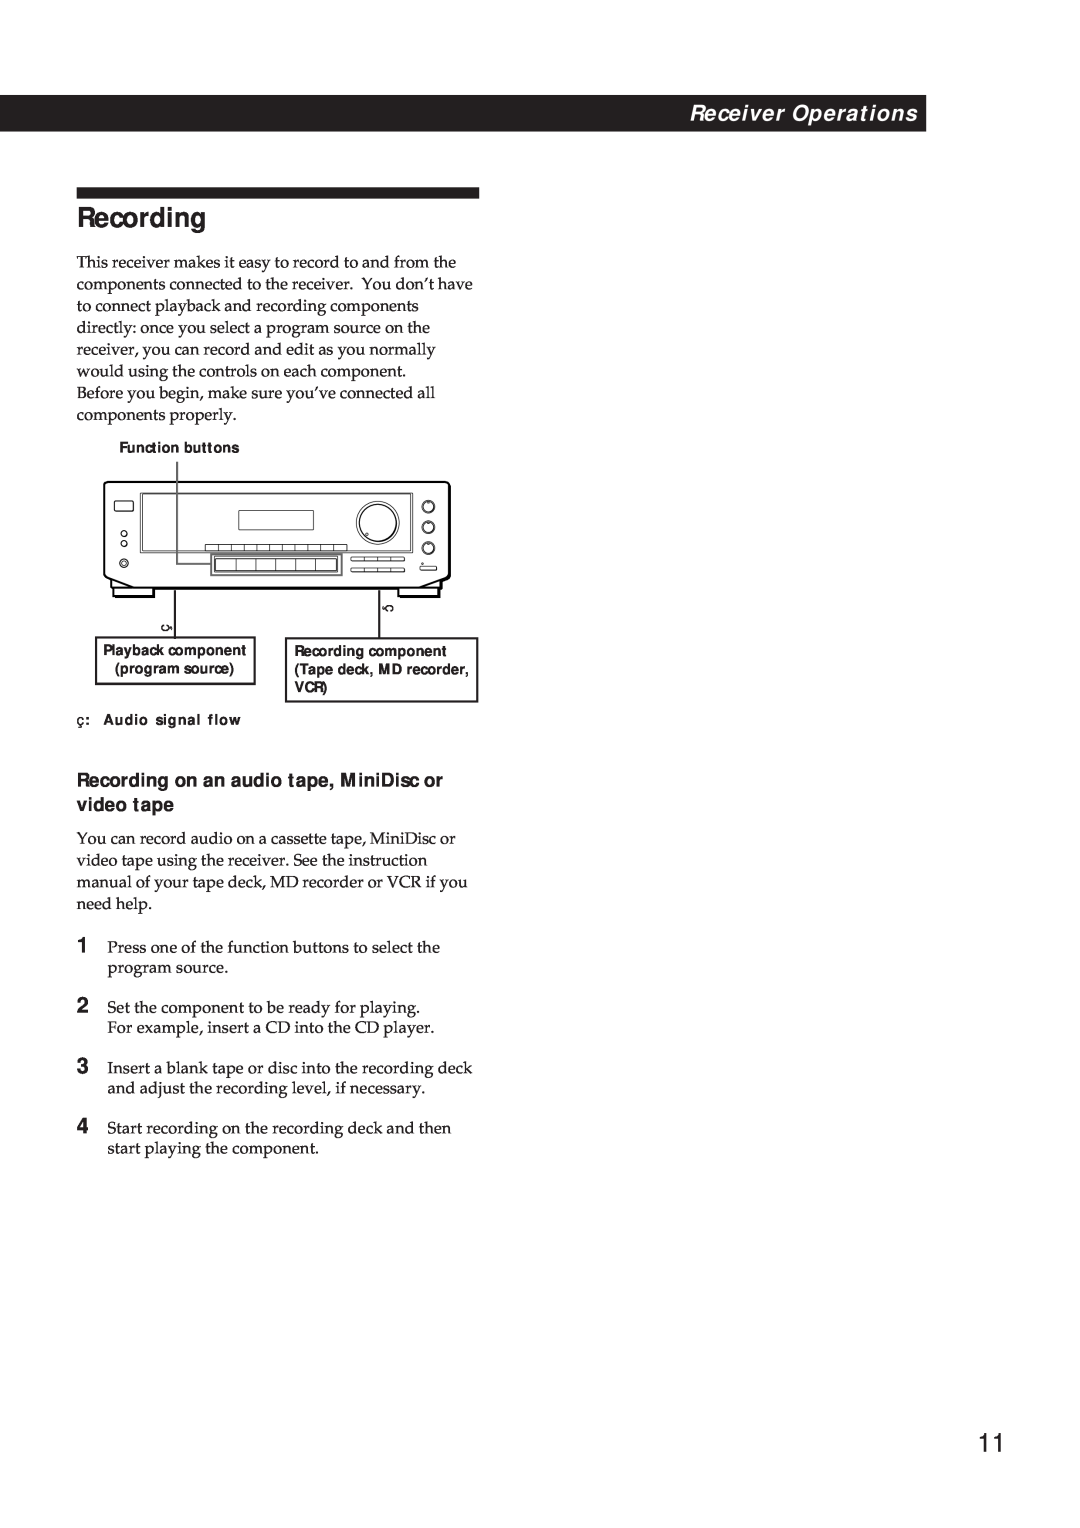 Sony STR-DE310 manual Recording, Receiver Operations, Function buttons, ç Audio signal flow 